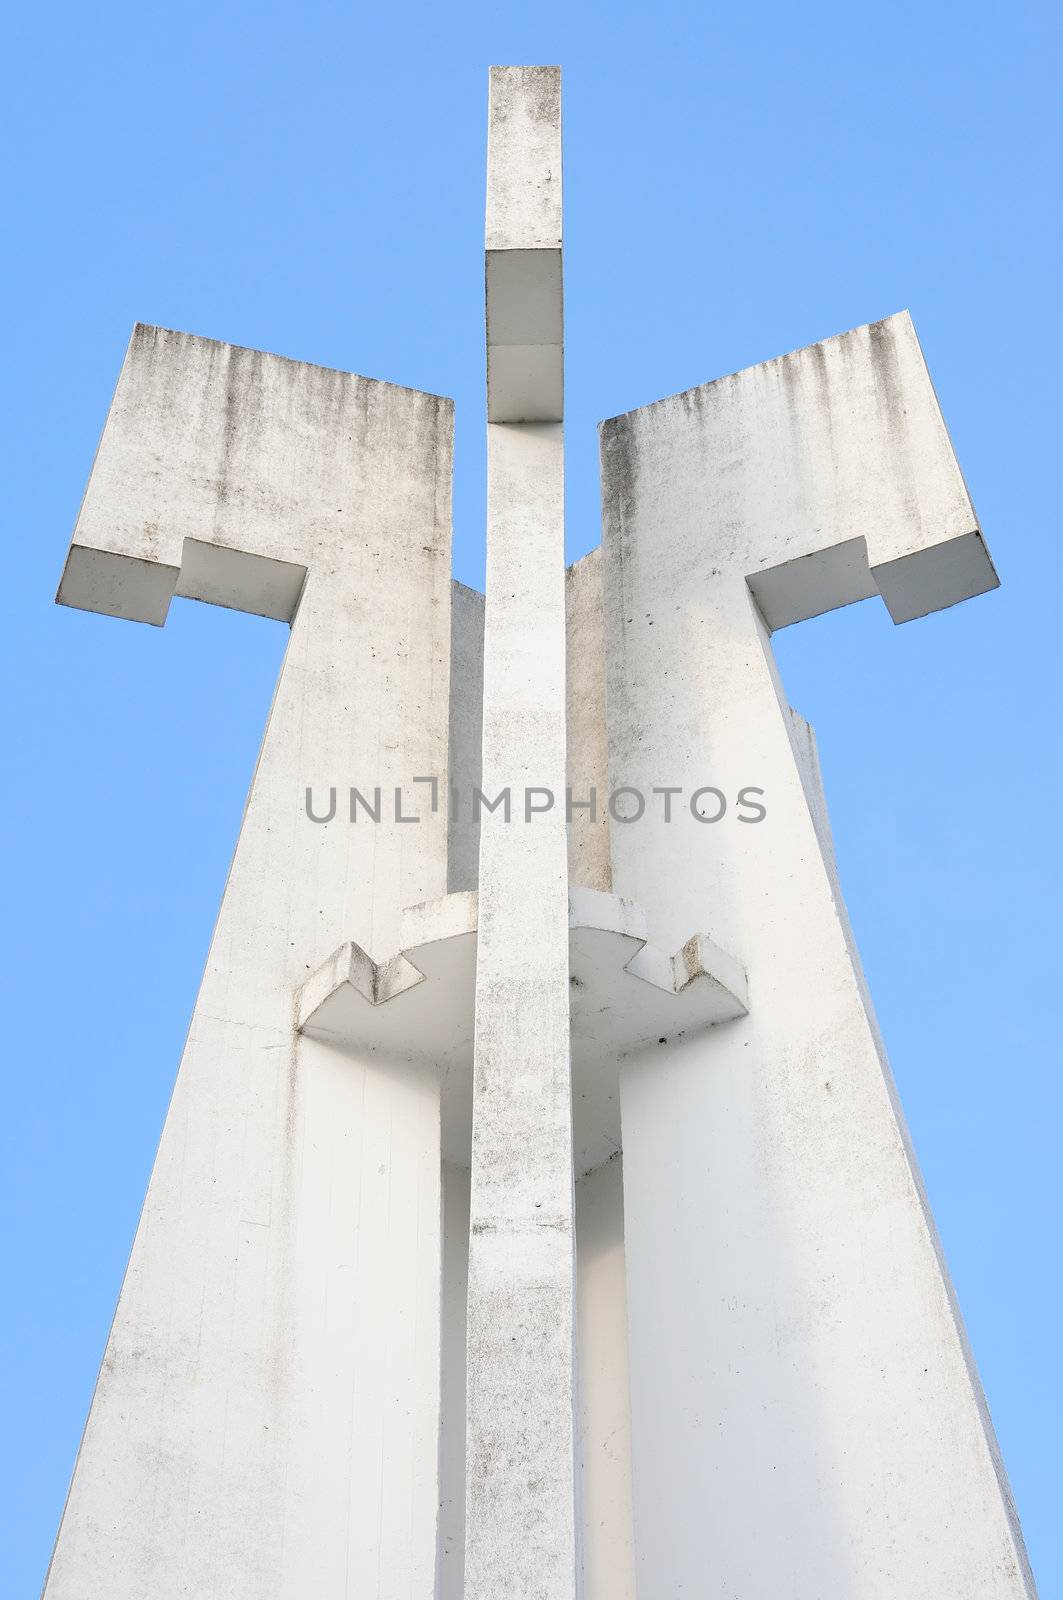 Monument against blue sky